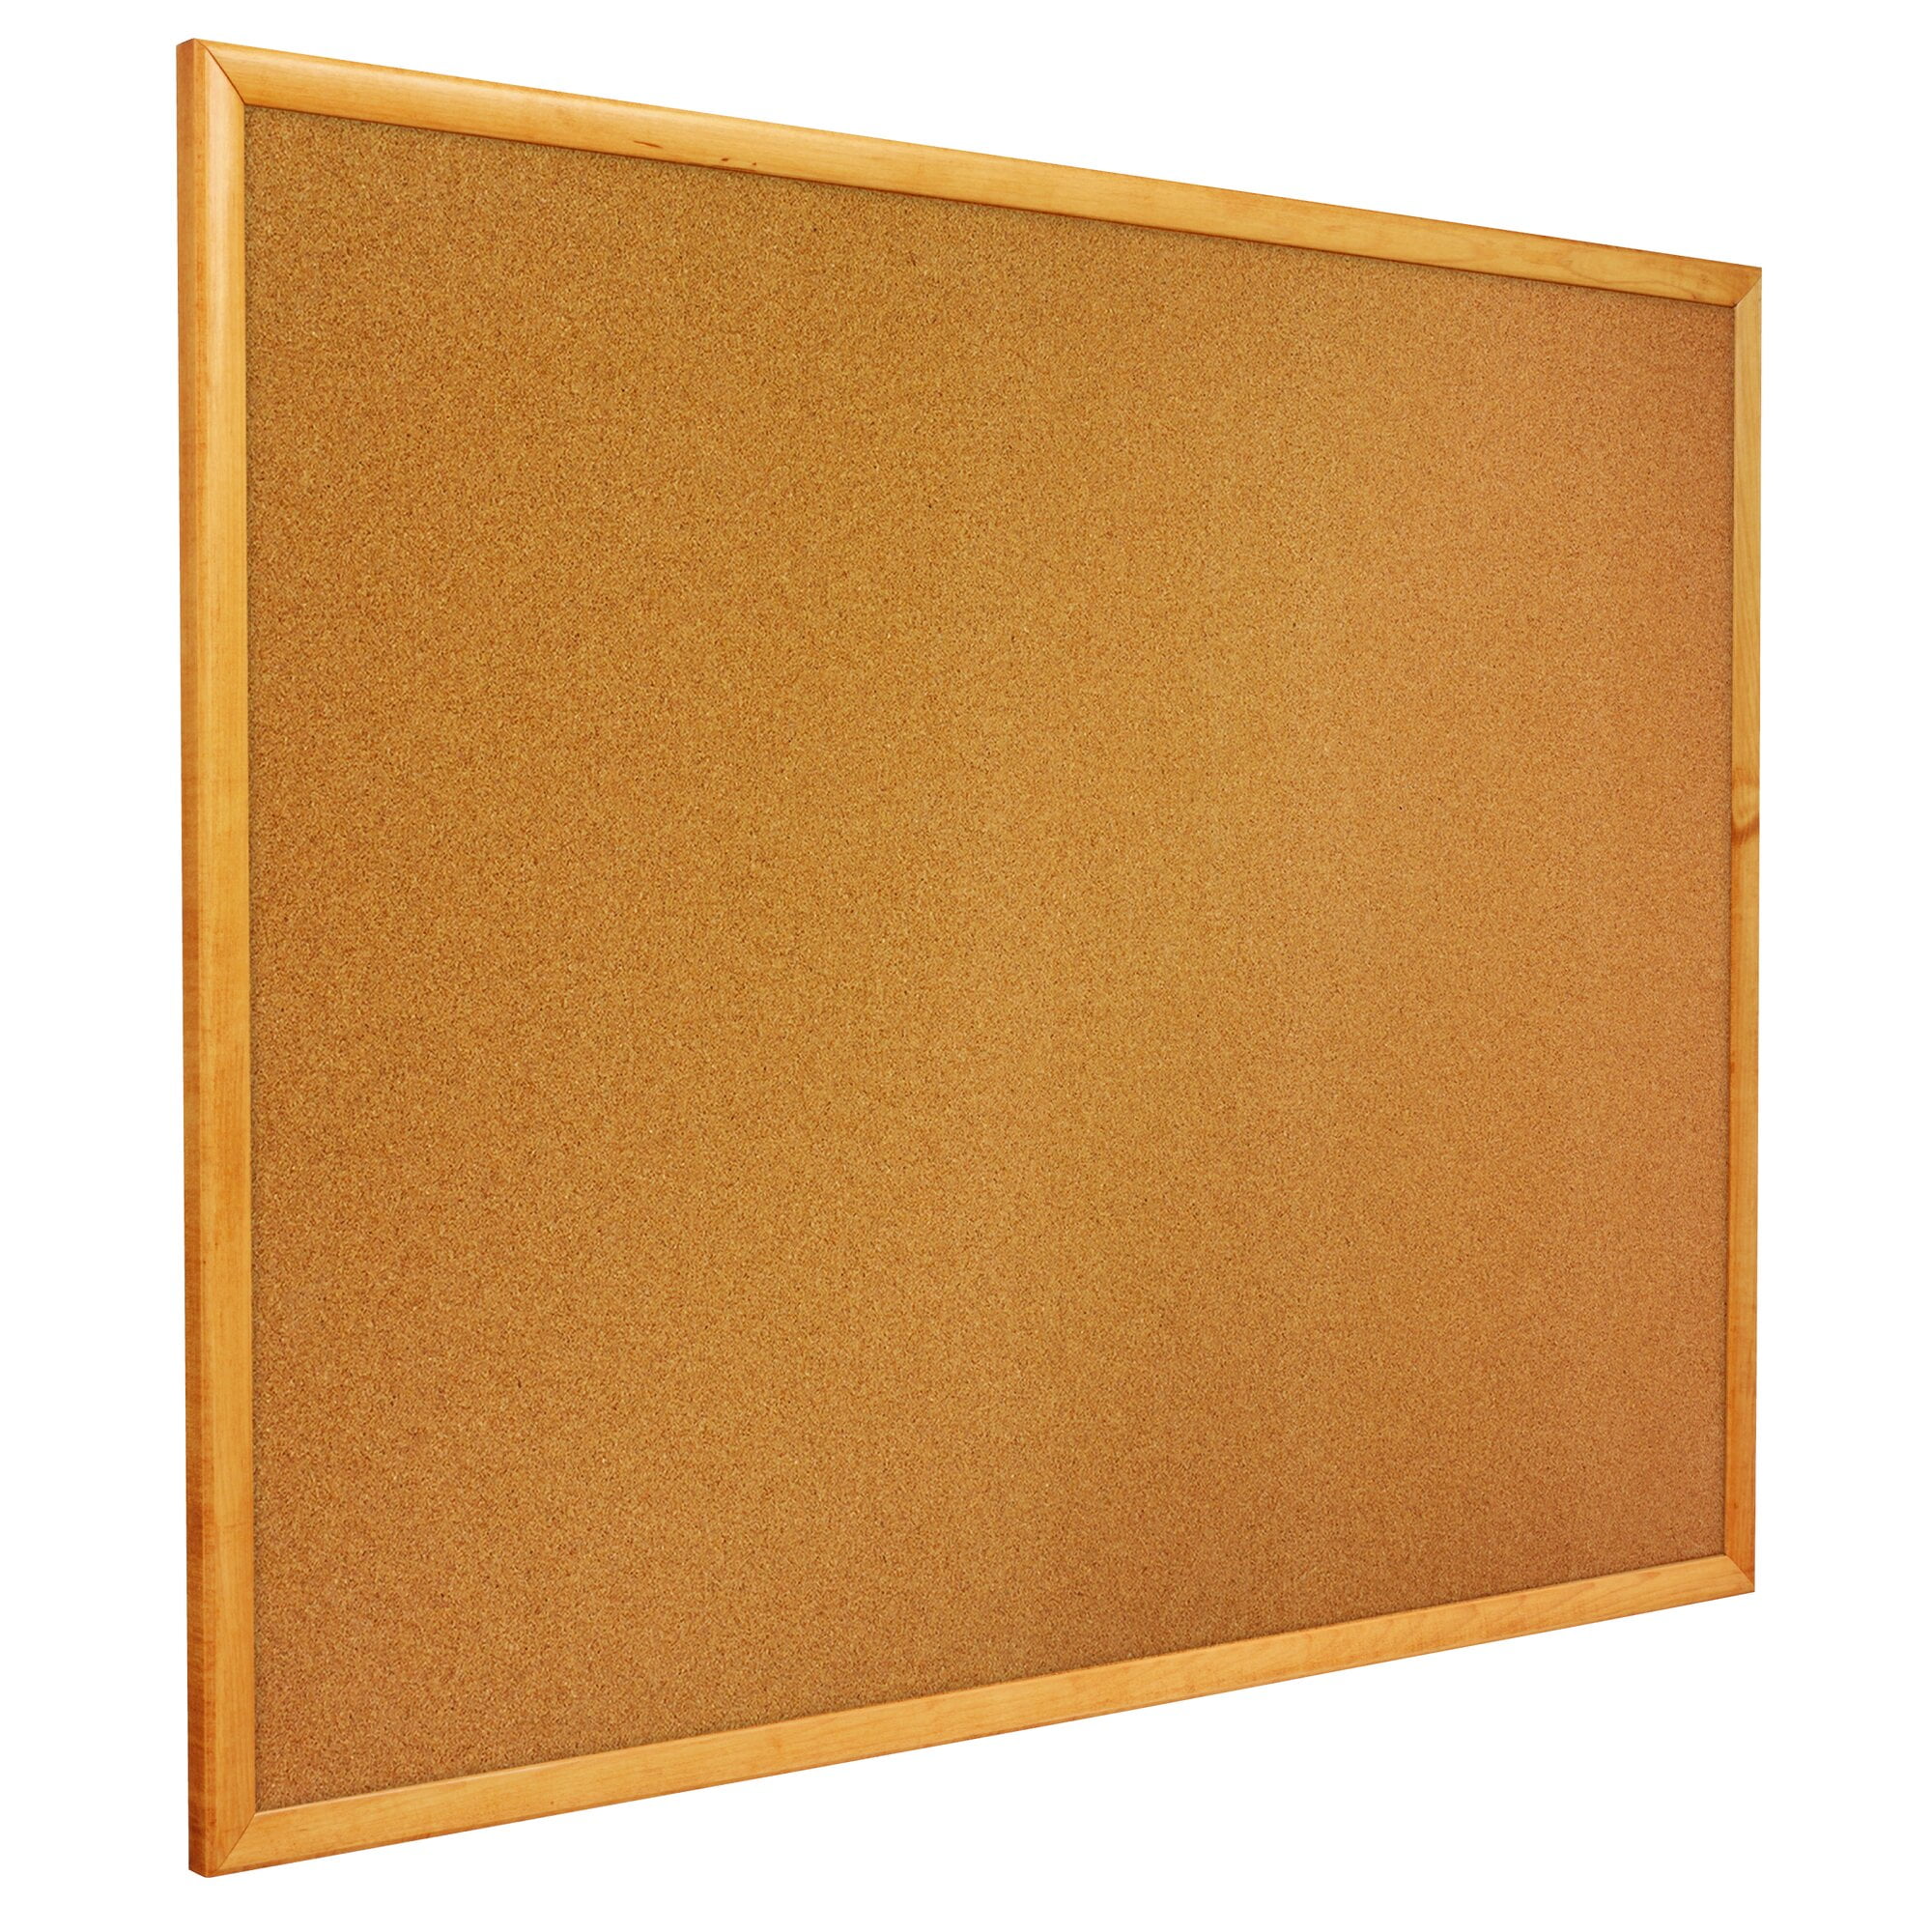 Quartet Classic Series Cork Bulletin Board 48 x 36 Oak Finish Frame 304 34138304006